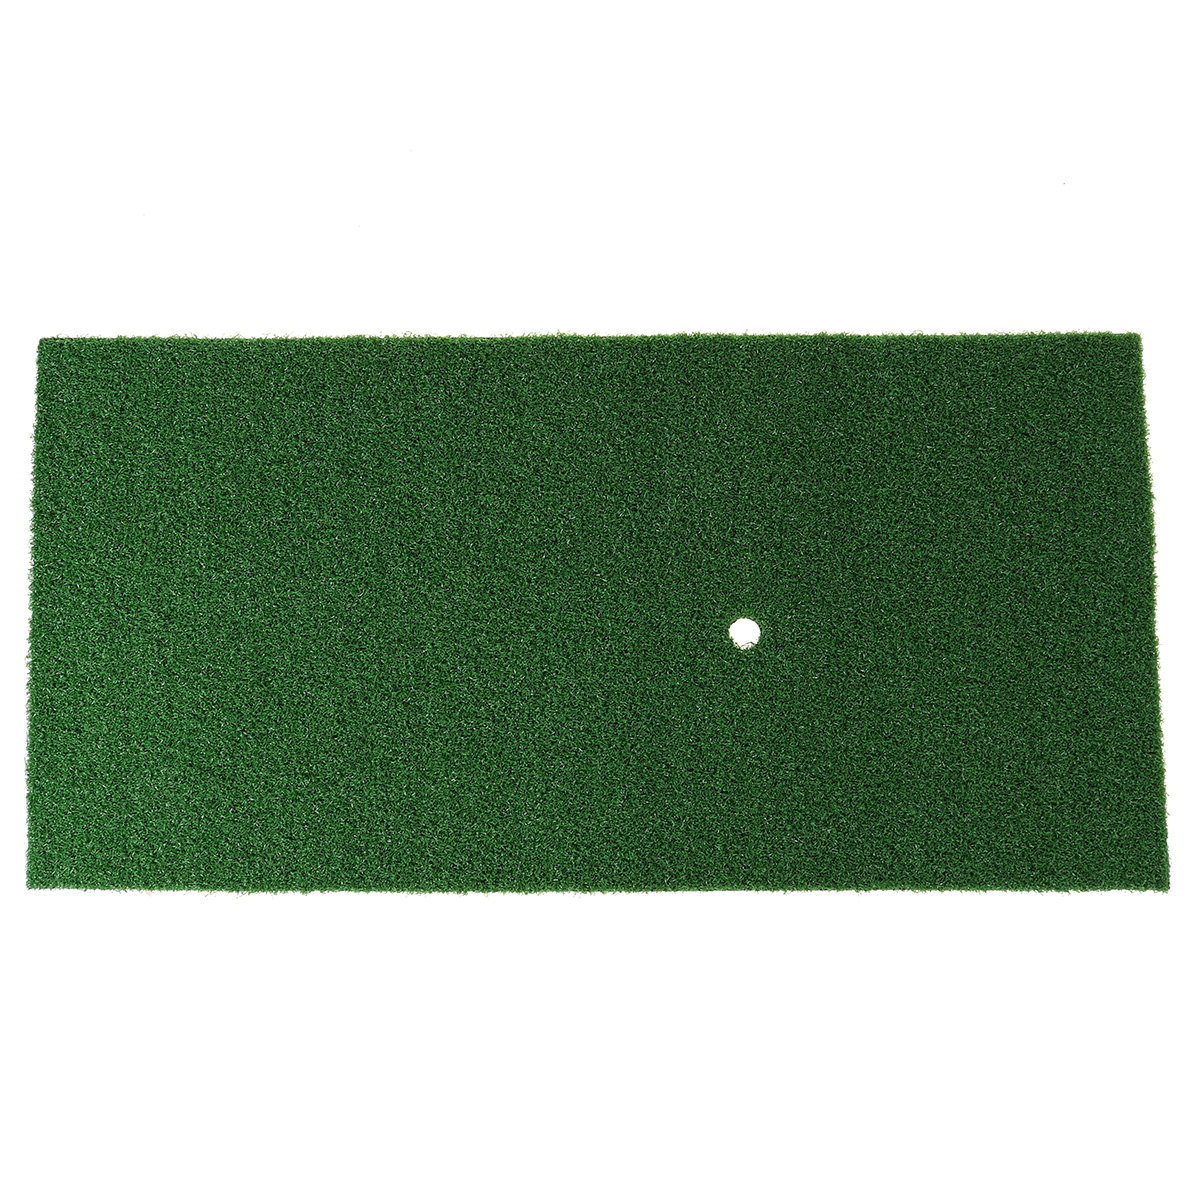 Backyard-Golf-Practice-Mat-Training-Hitting-Practice-Tee-Holder-Grass-Mat-1680279-7